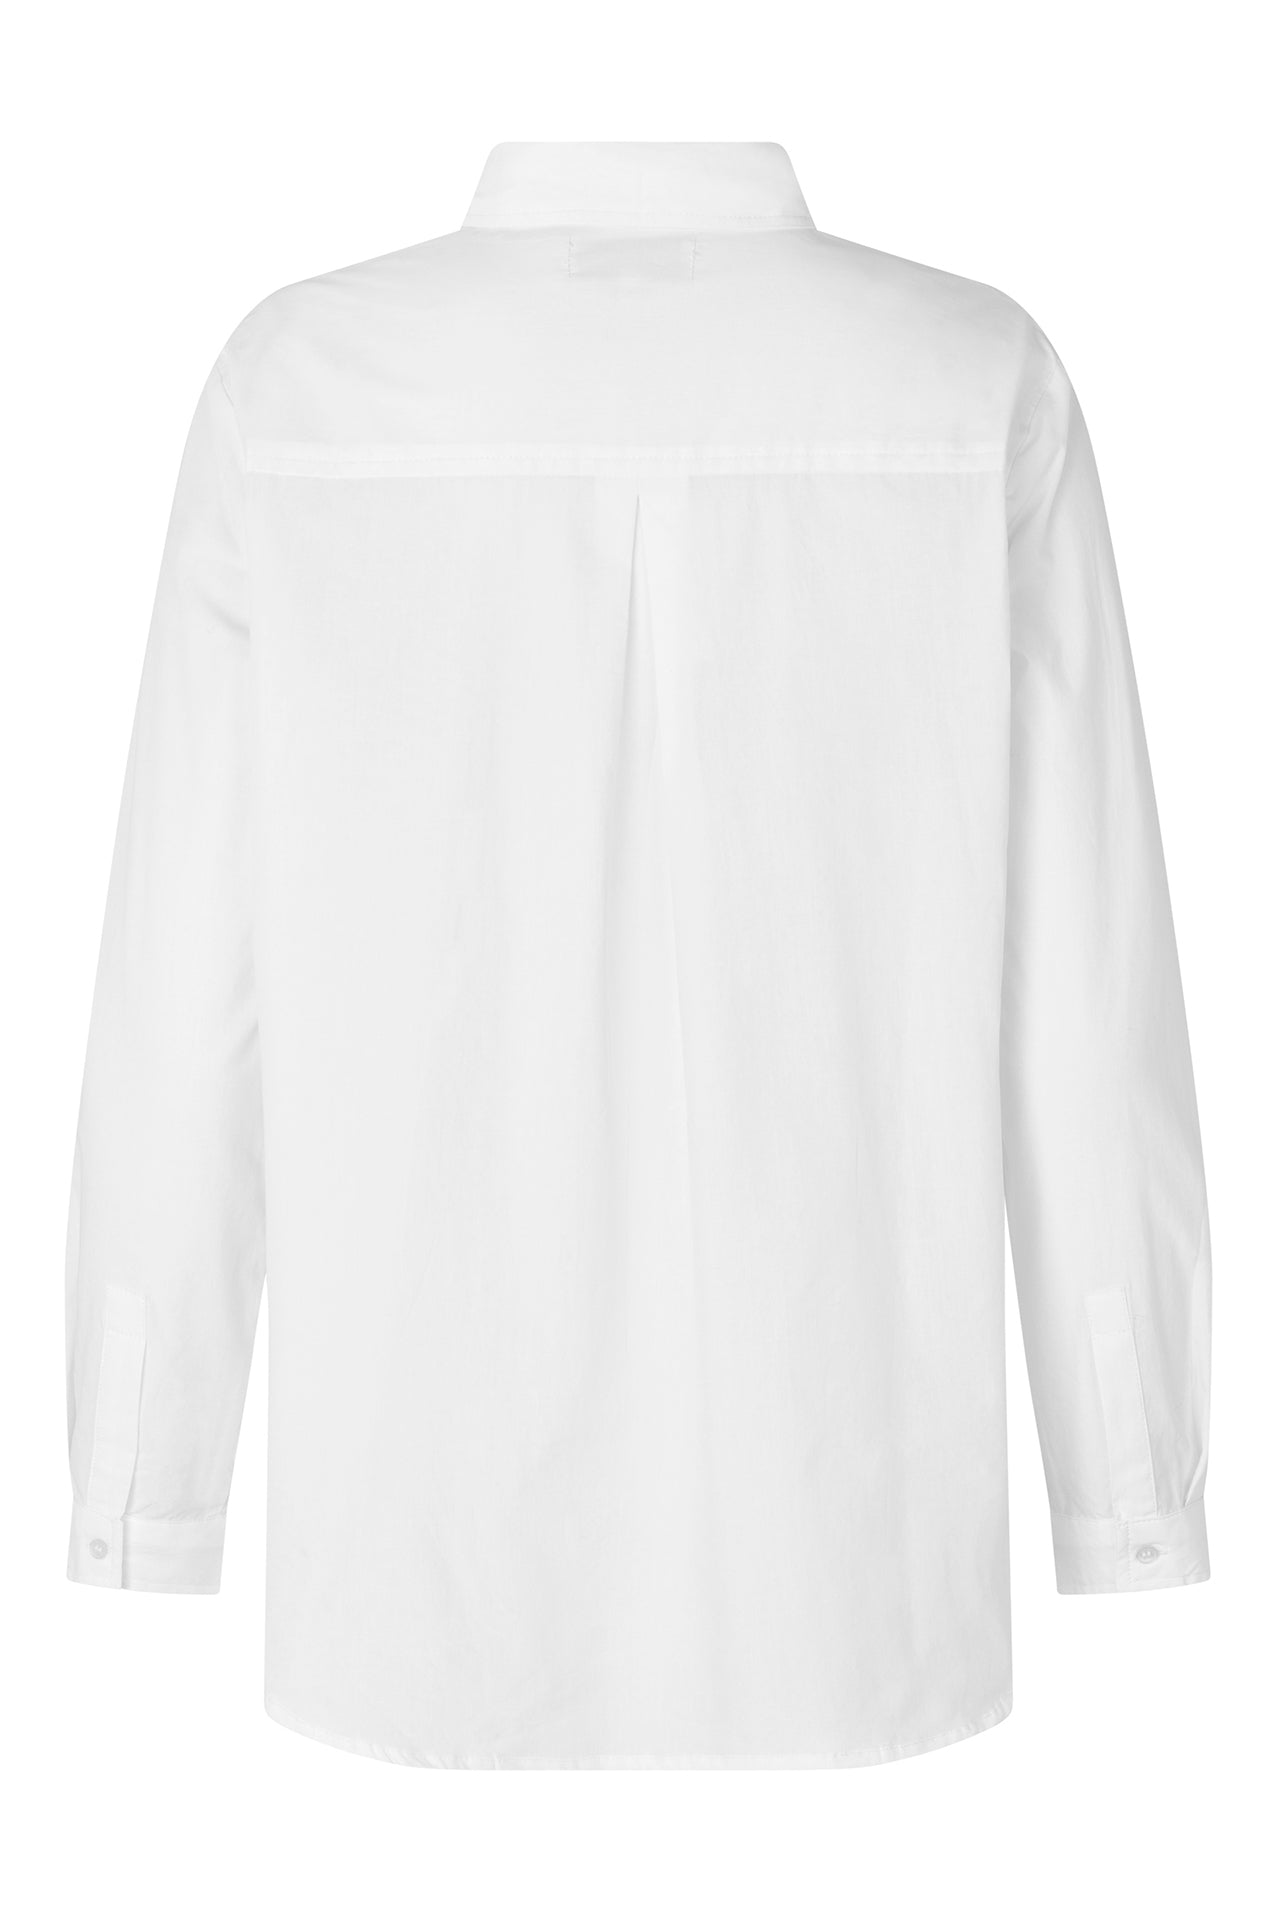 Lollys Laundry JoyceLL Shirt LS Shirt Hvid